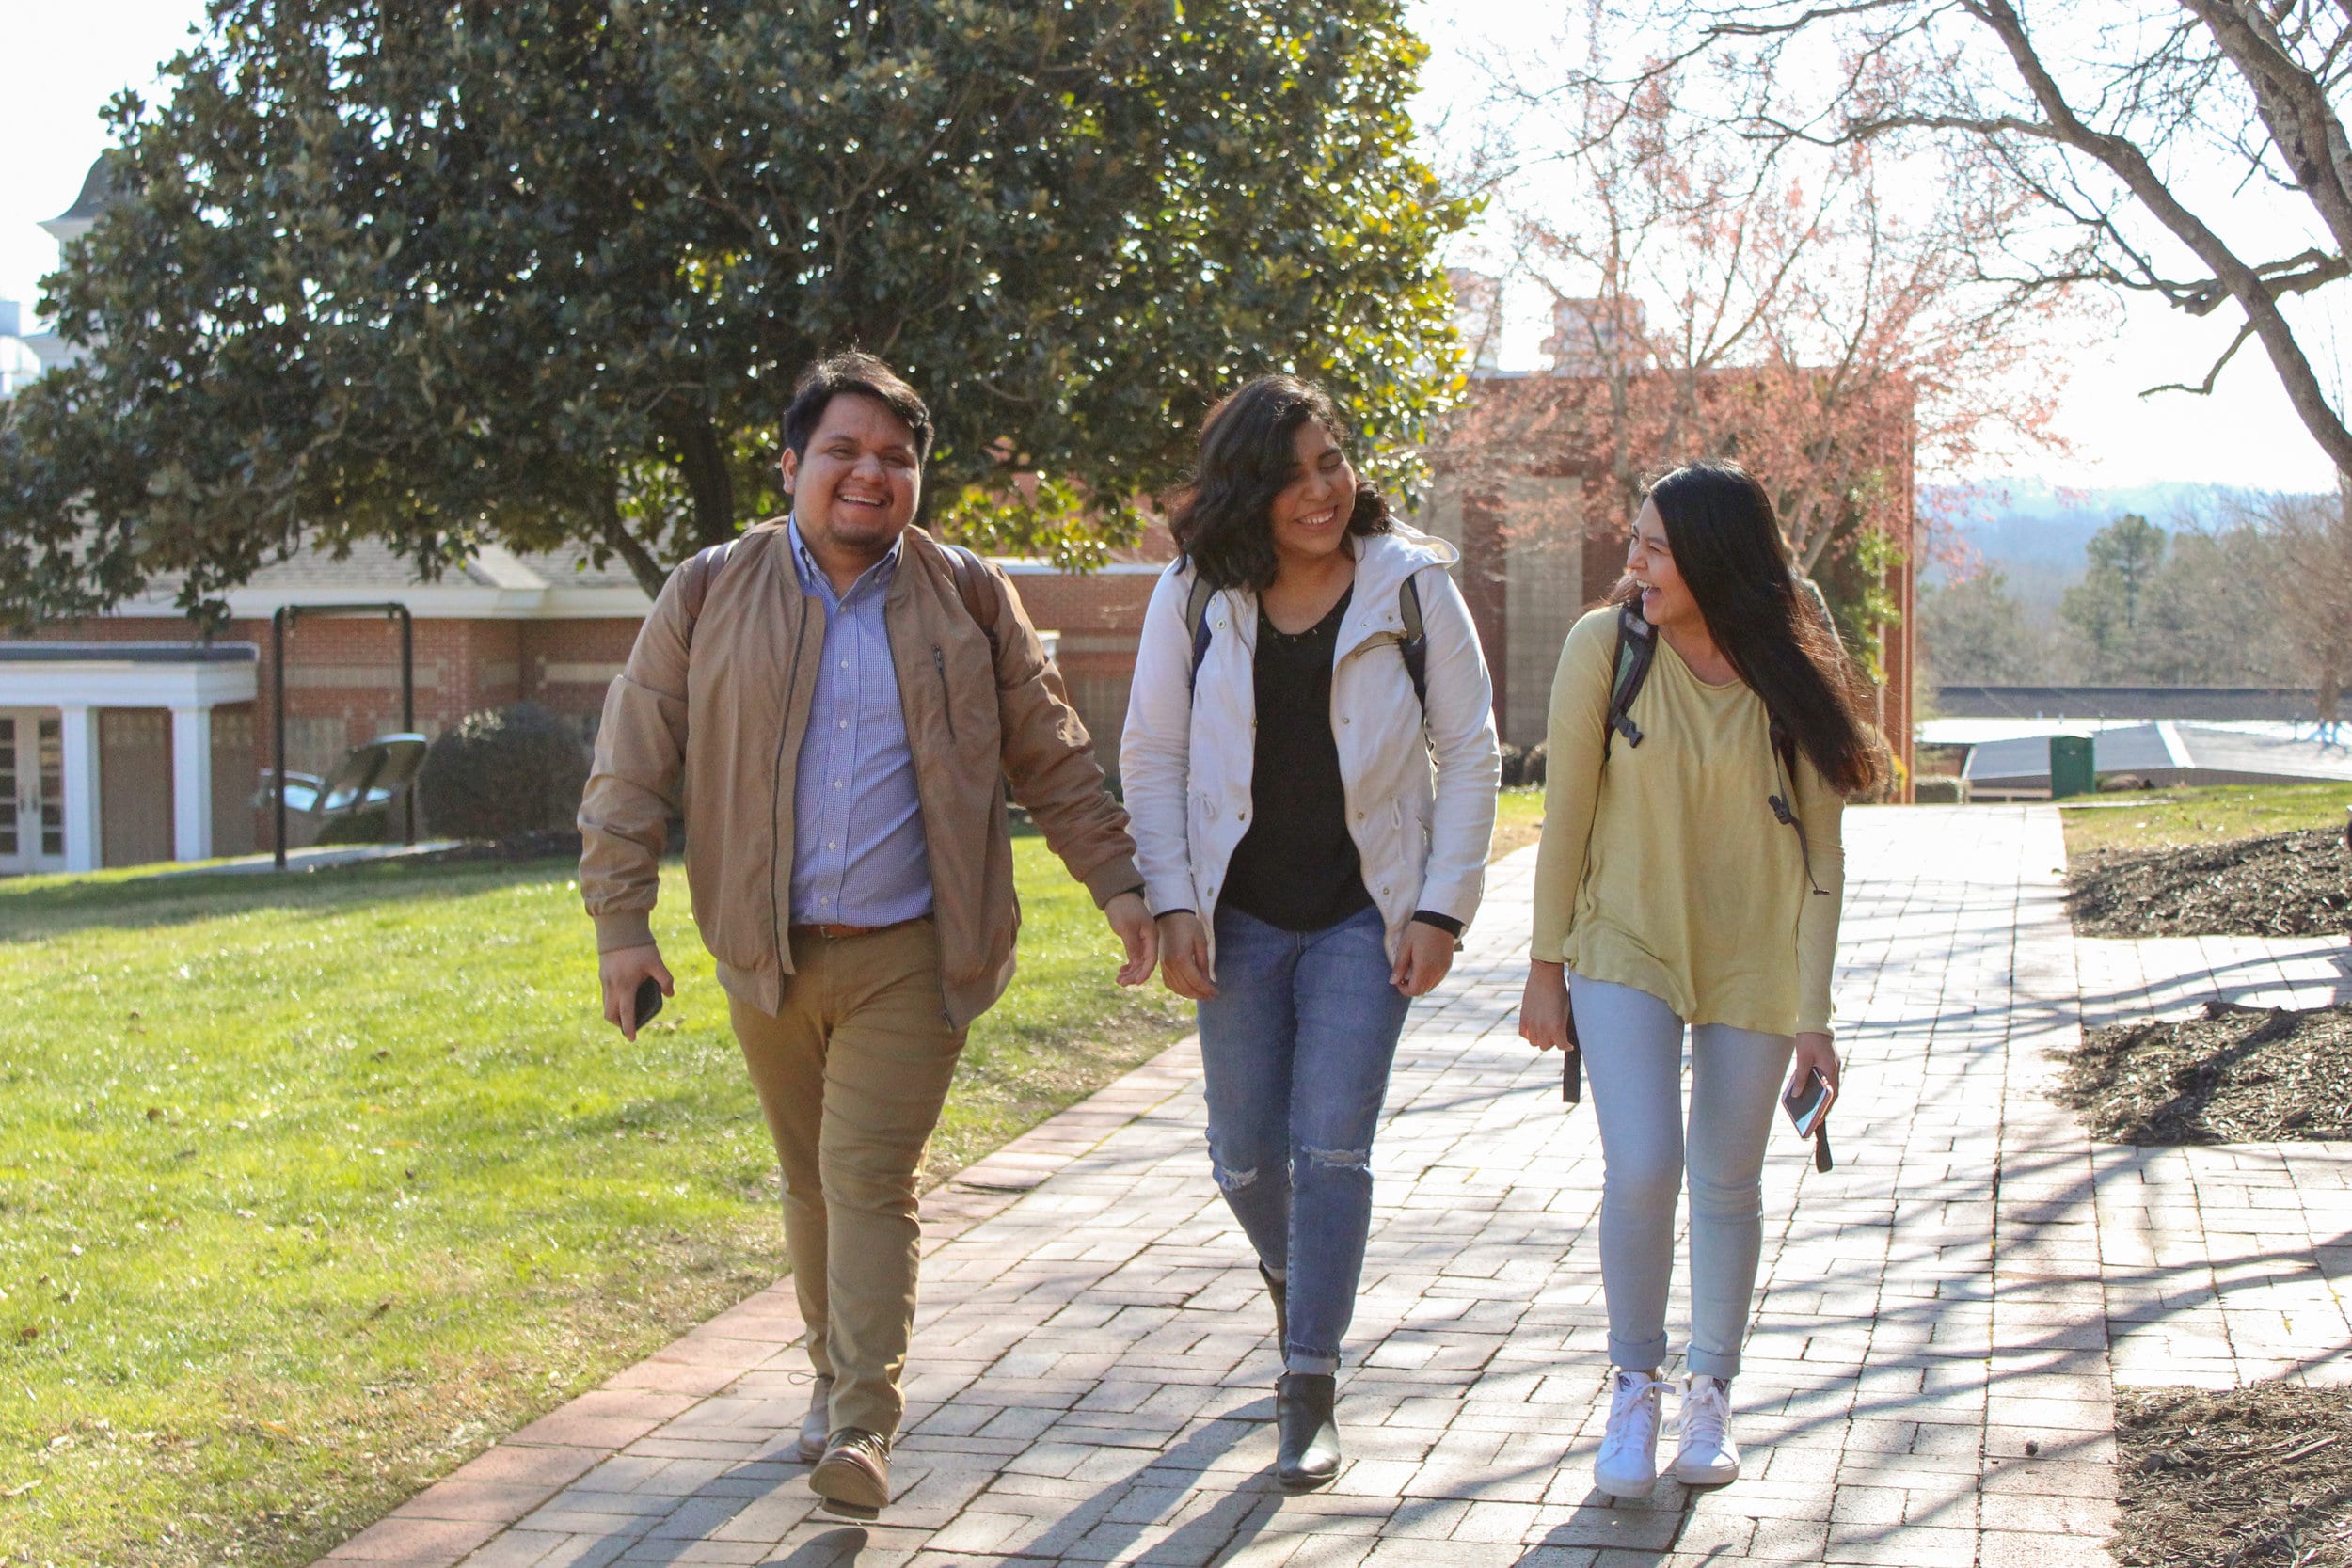 Senior Luis Travis, freshman Vanessa Martinez, and sophomore Mary Garcia catch up while walking to their next class.